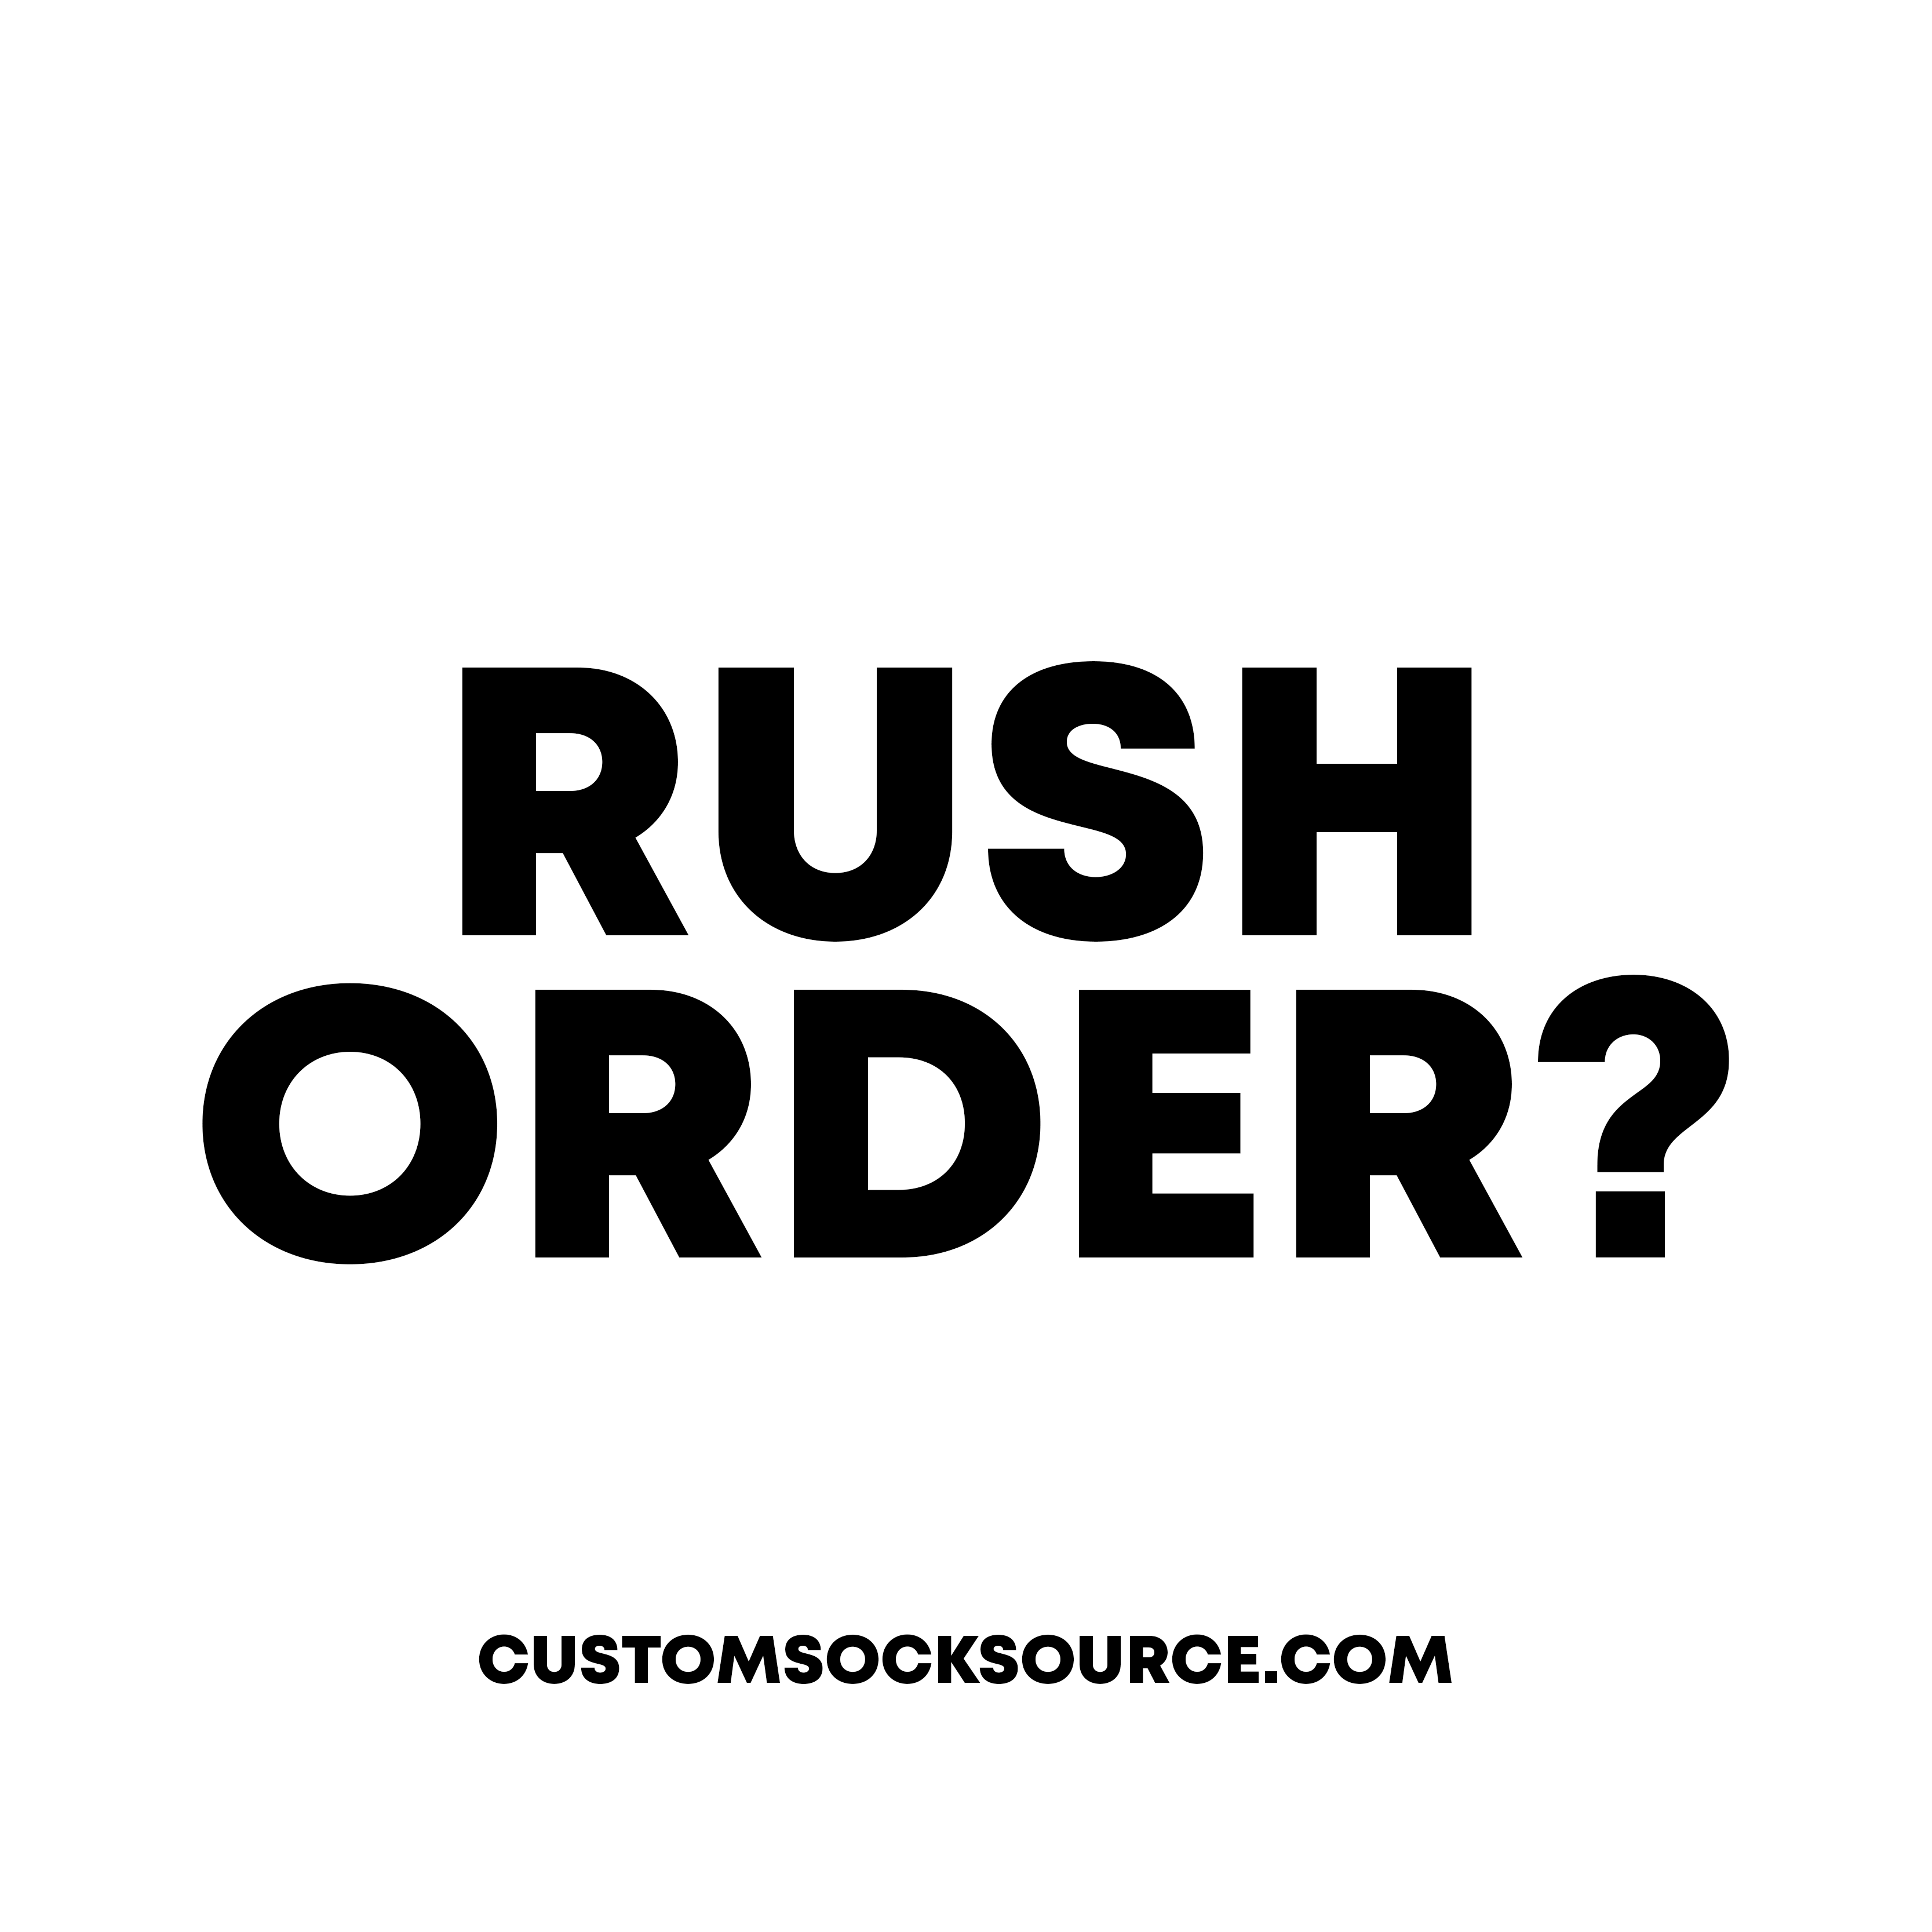 Rush order? (optional)